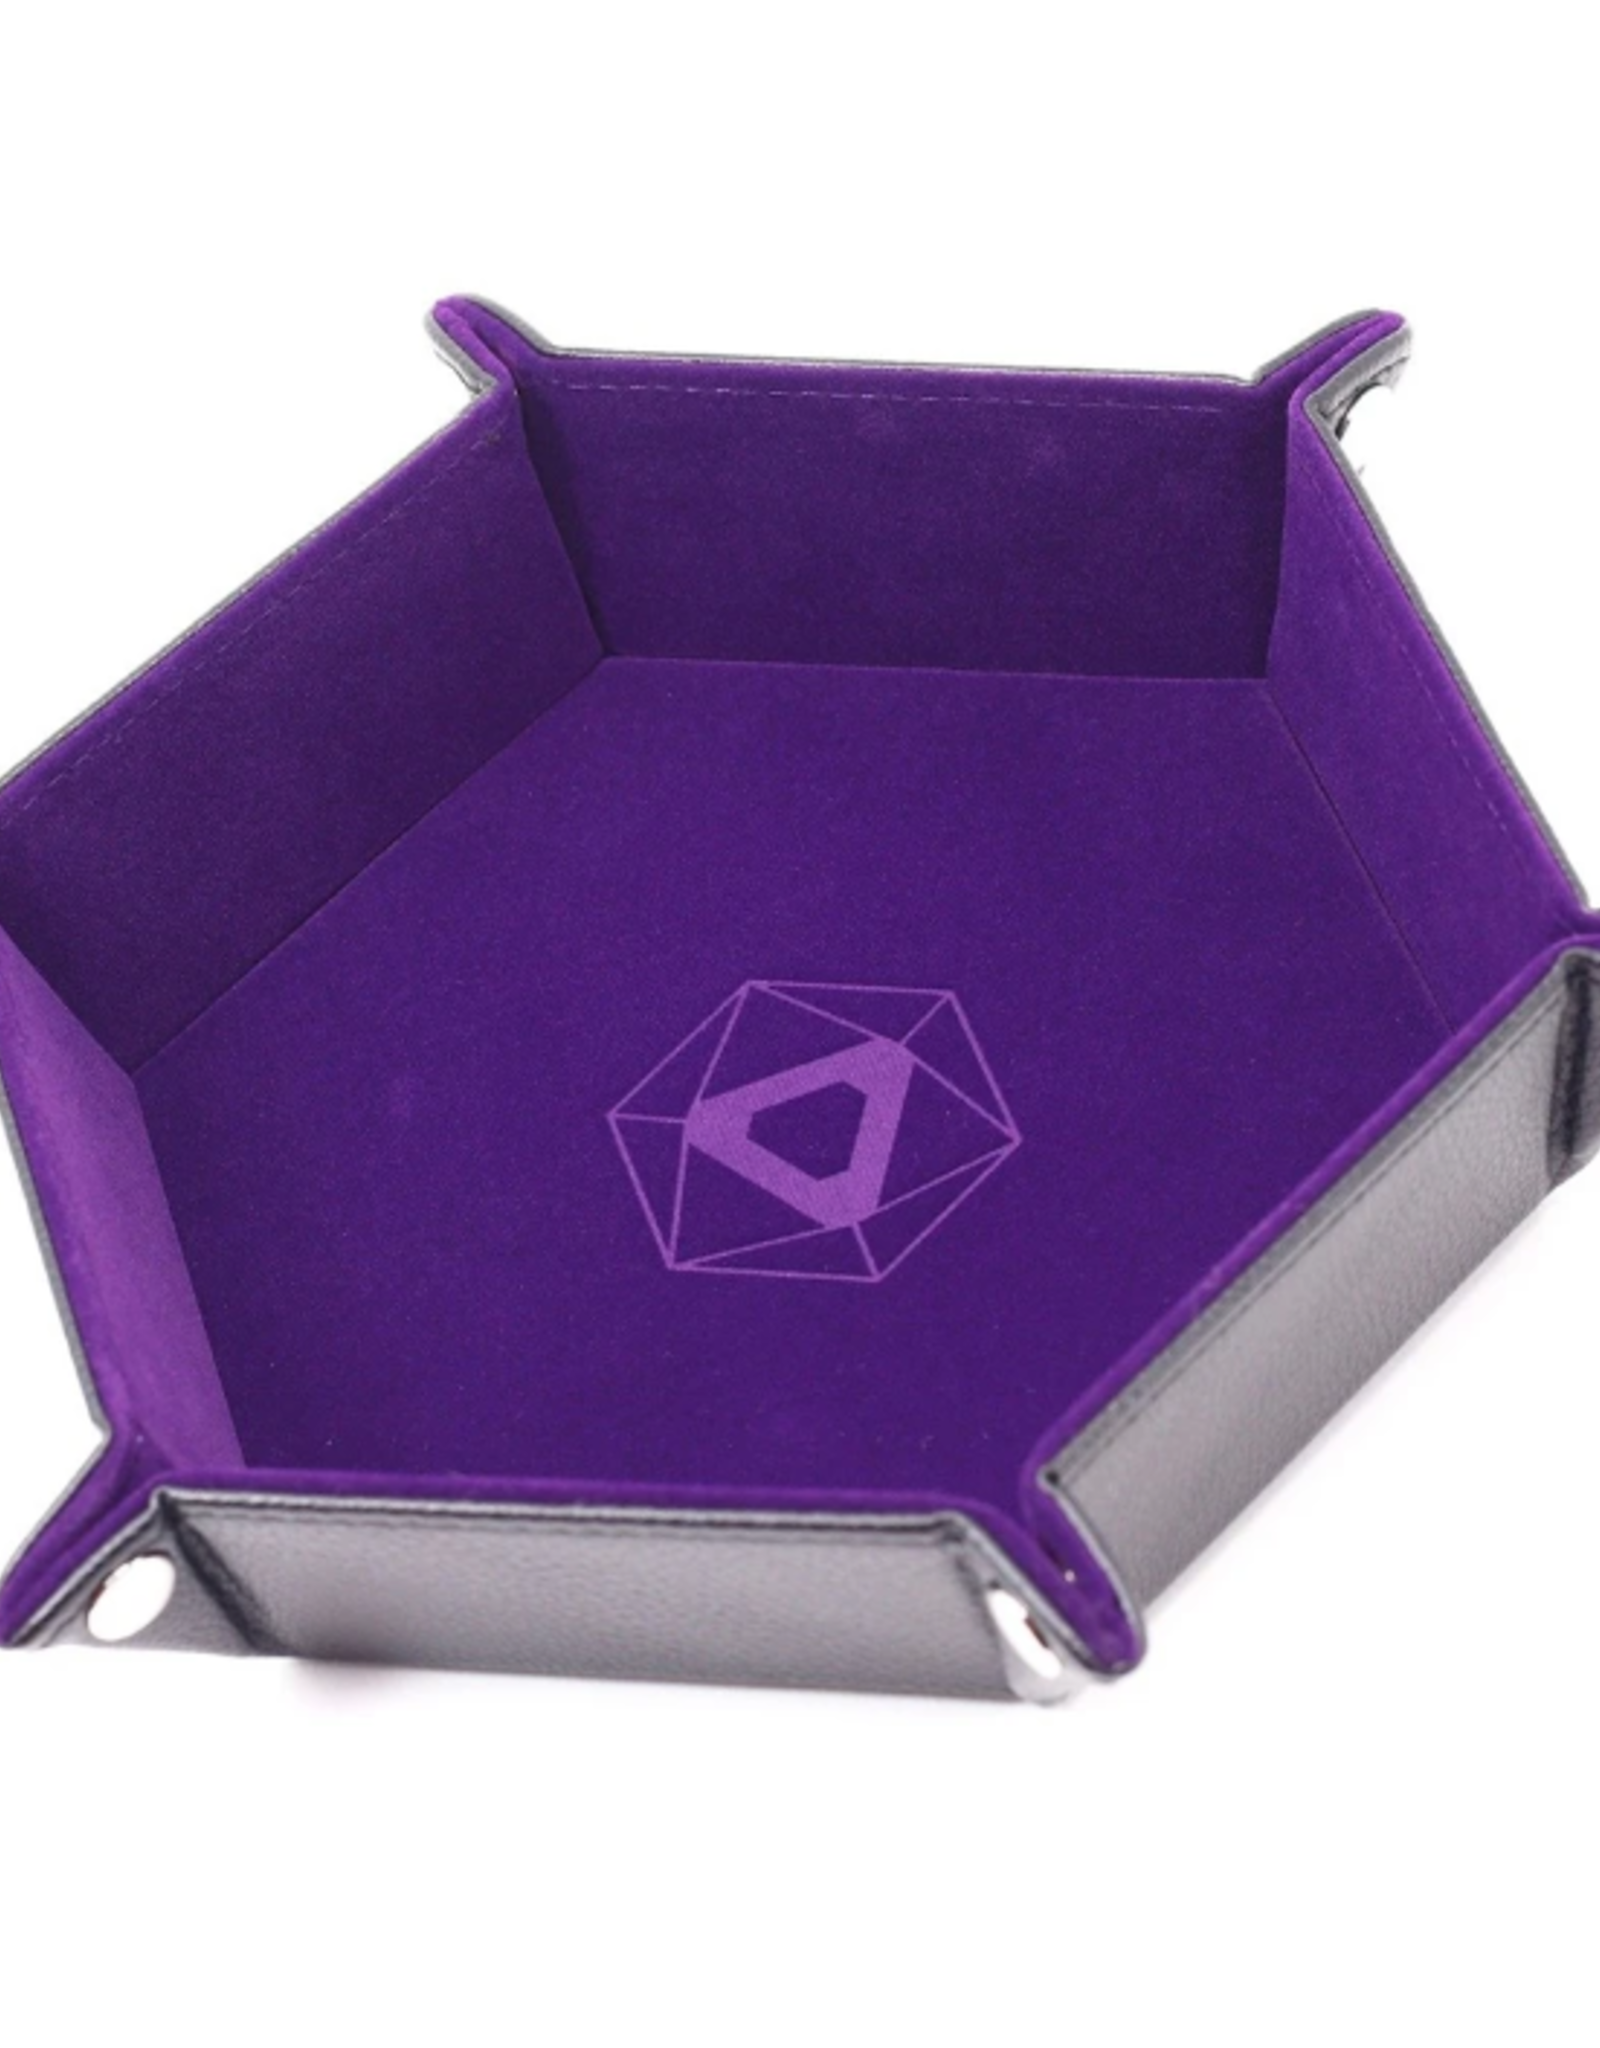 Die Hard Dice Folding Hex Tray Purple Velvet